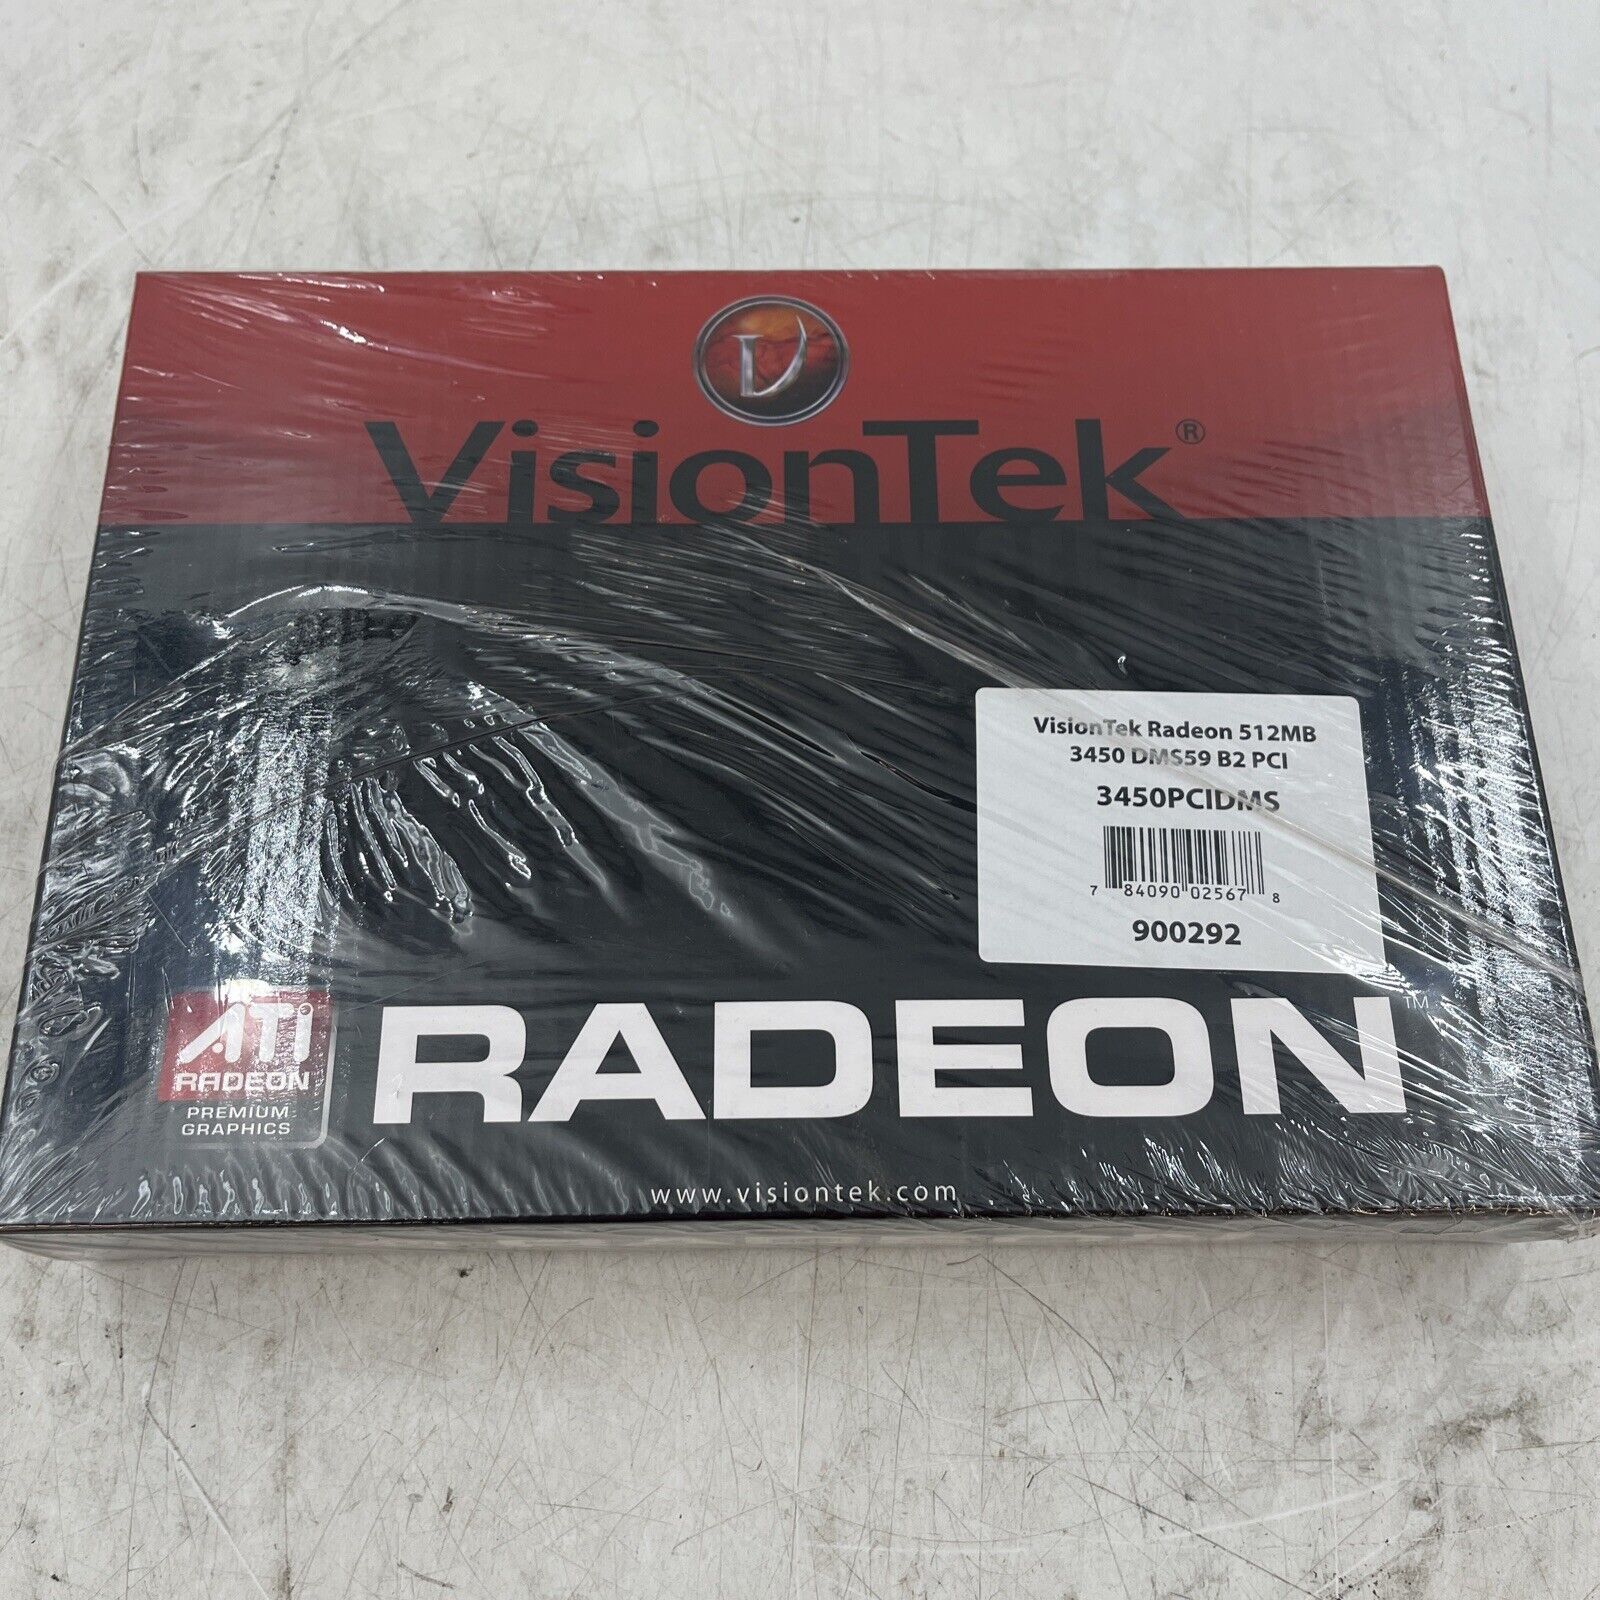 VisionTek ATI Radeon HD3450, 512MB, DMS-59 + 2xDVI-I Connector PCI Graphics Card